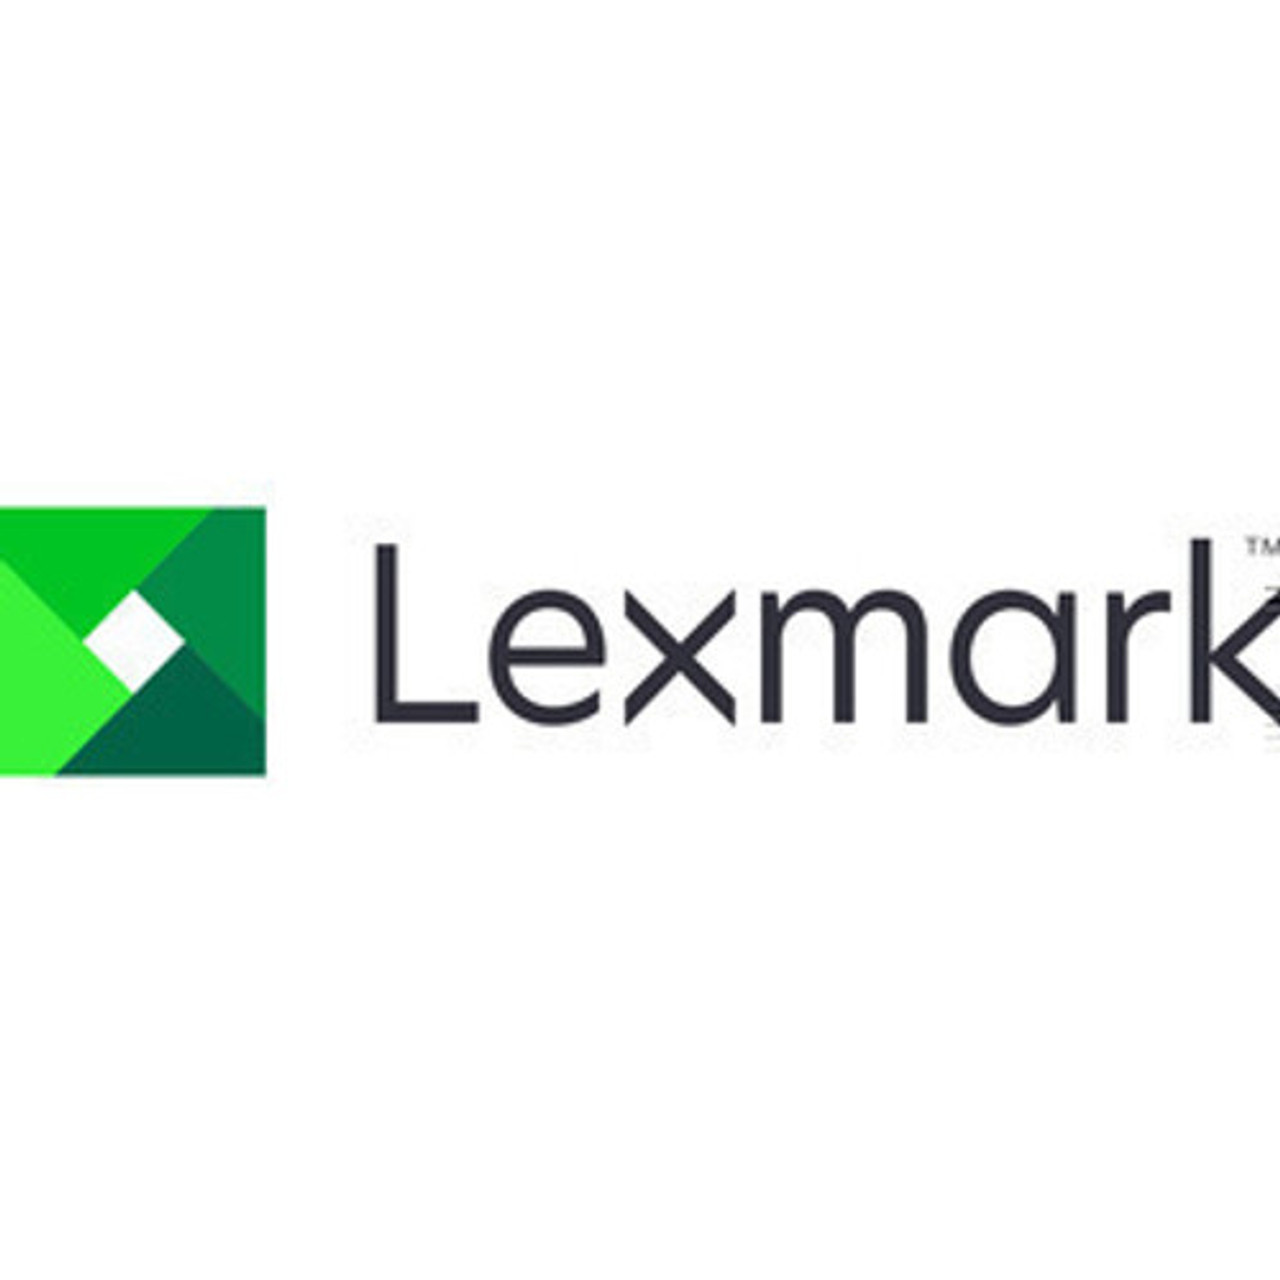 Lexmark CX522 3 YR Onsite Repair Extended Warranty - 2364192